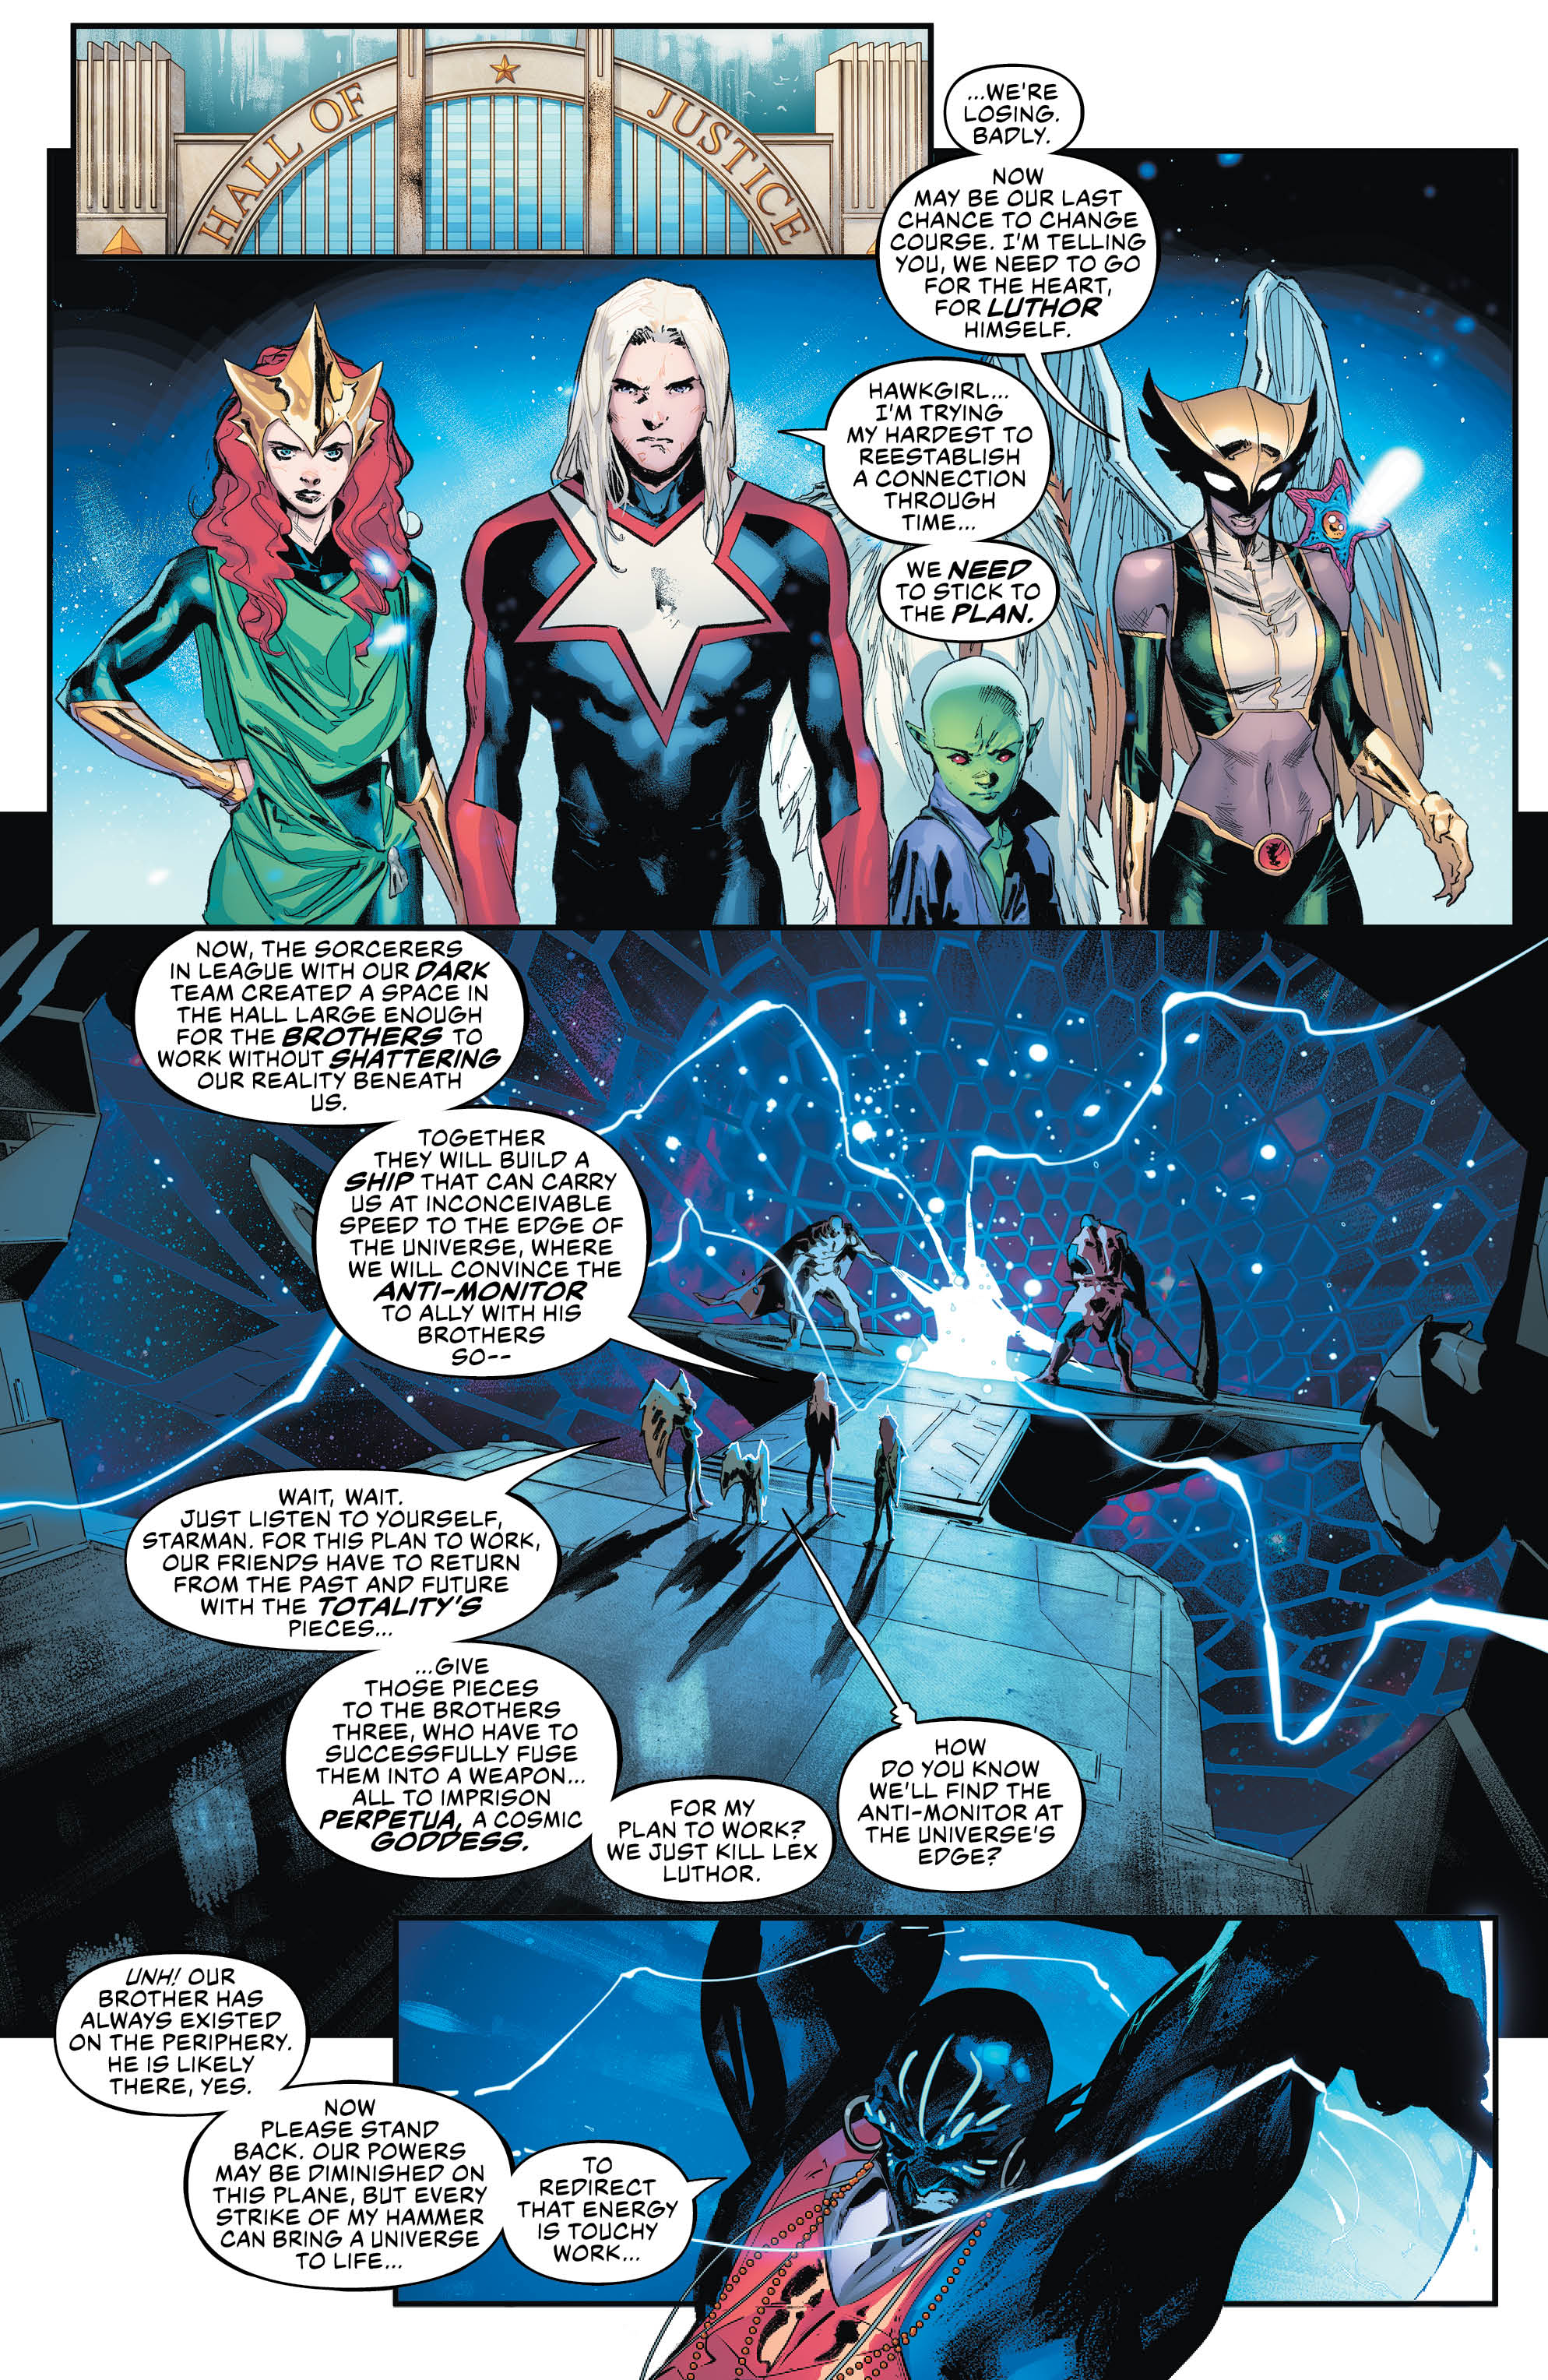 Justice League #31 page 4